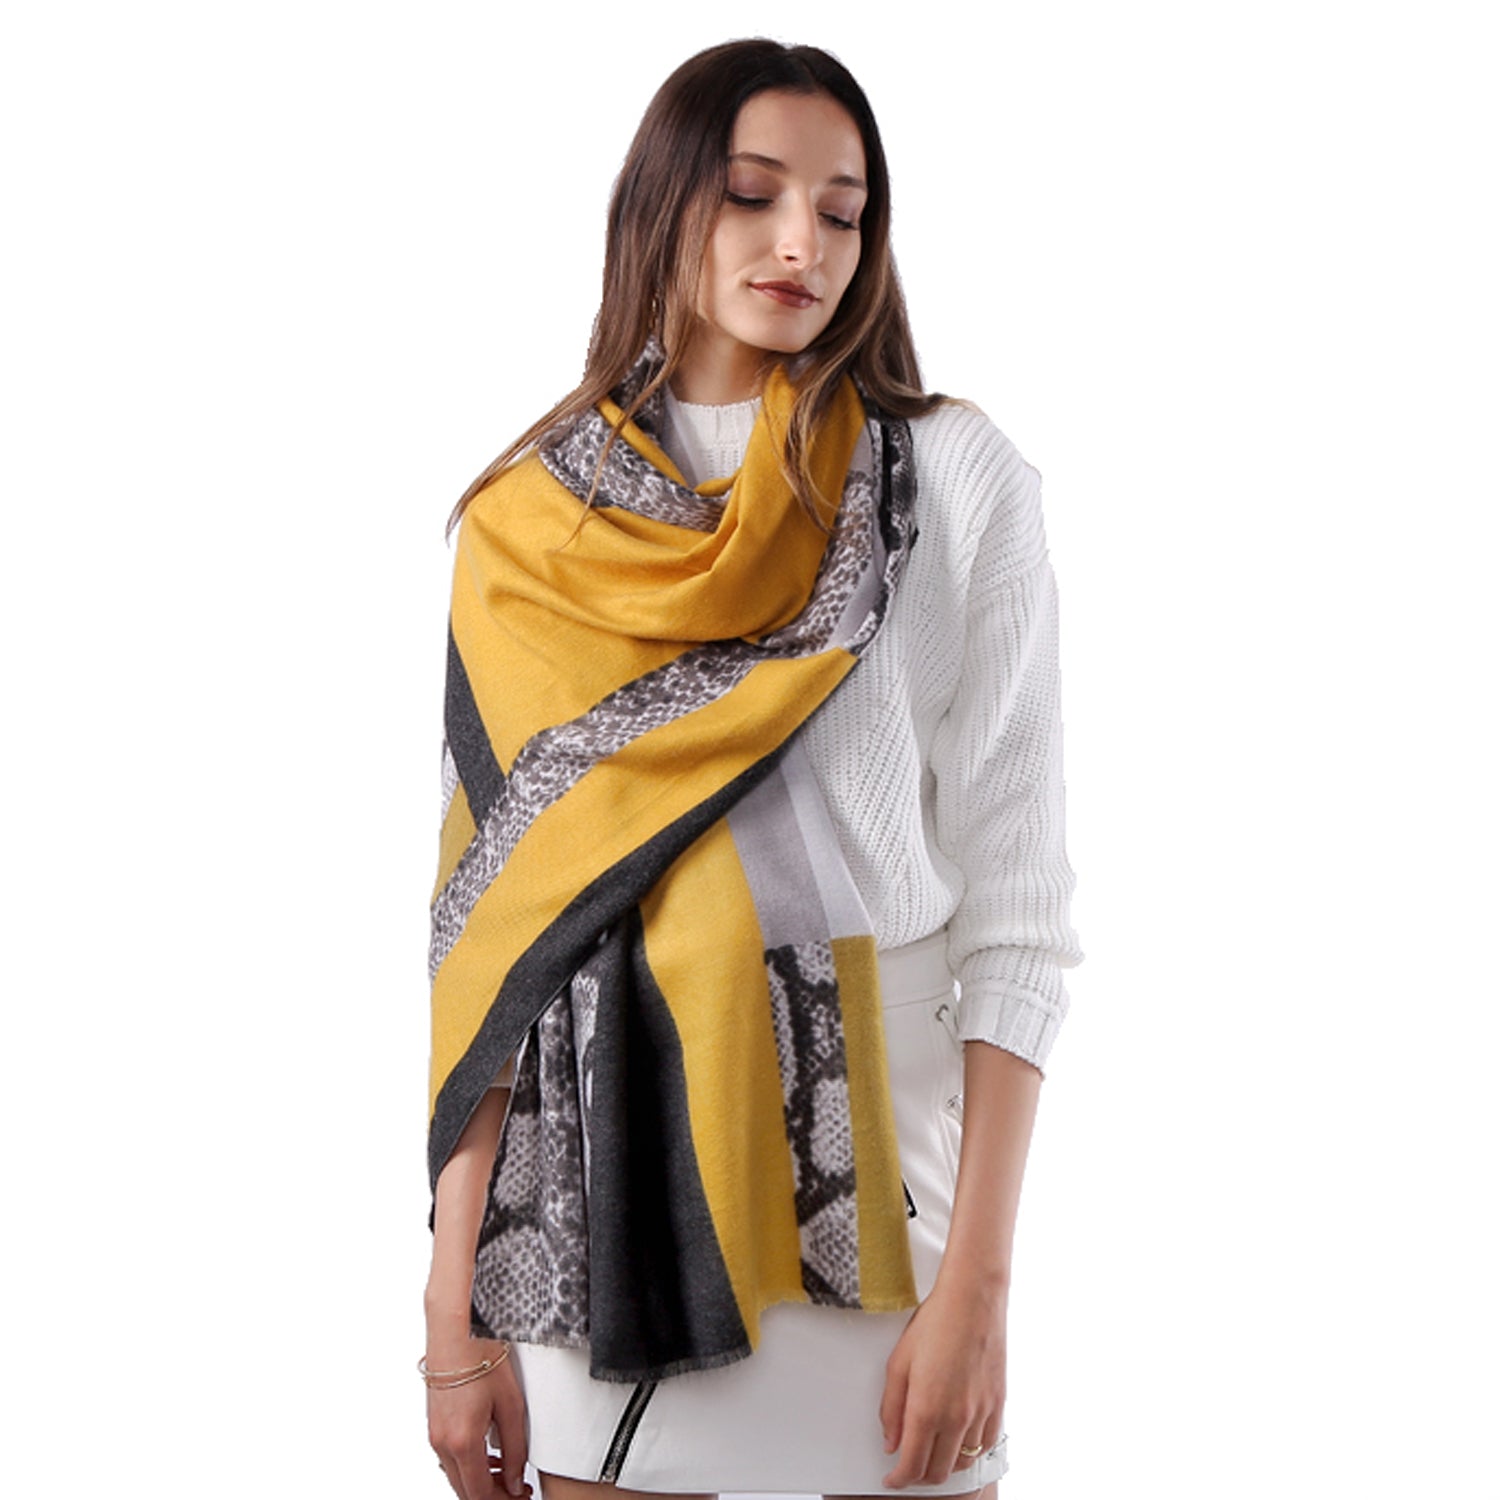 Uniquely Designed  Soft Warm- Autumn/Winter Scarf- Pashmina - Snake skin design - G&J's WOMEN'S clothing